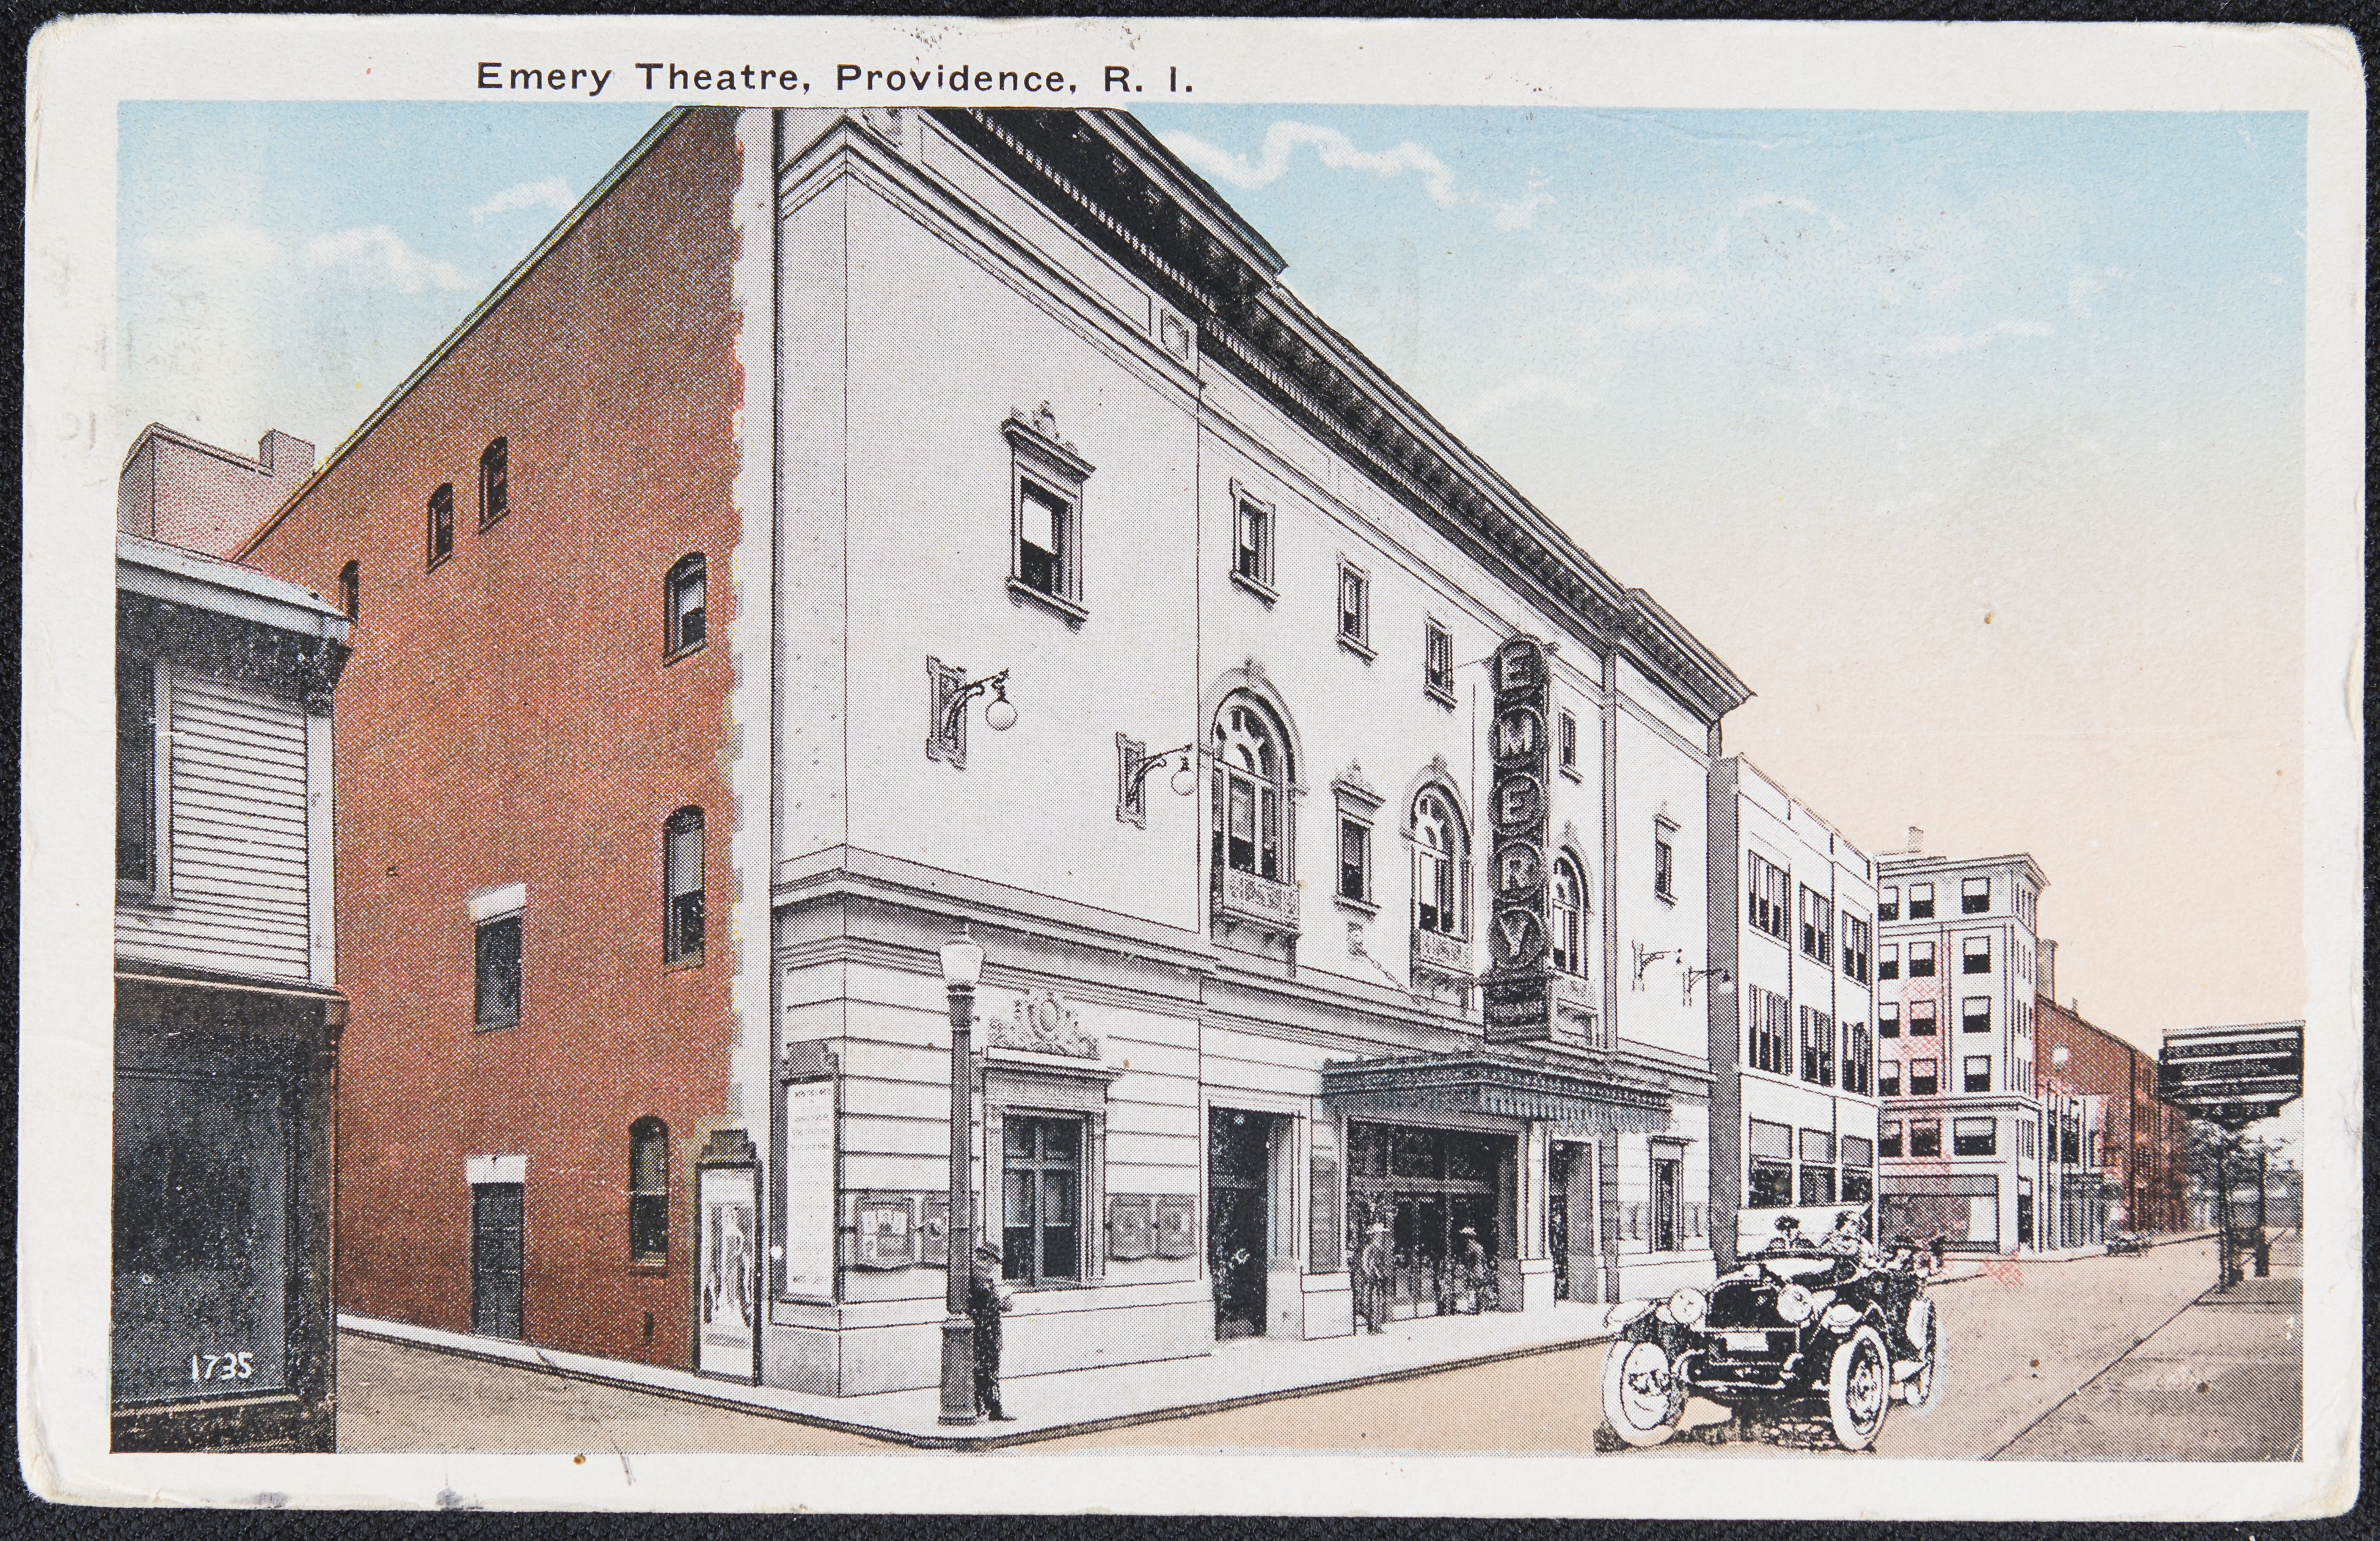 Emery Theatre building